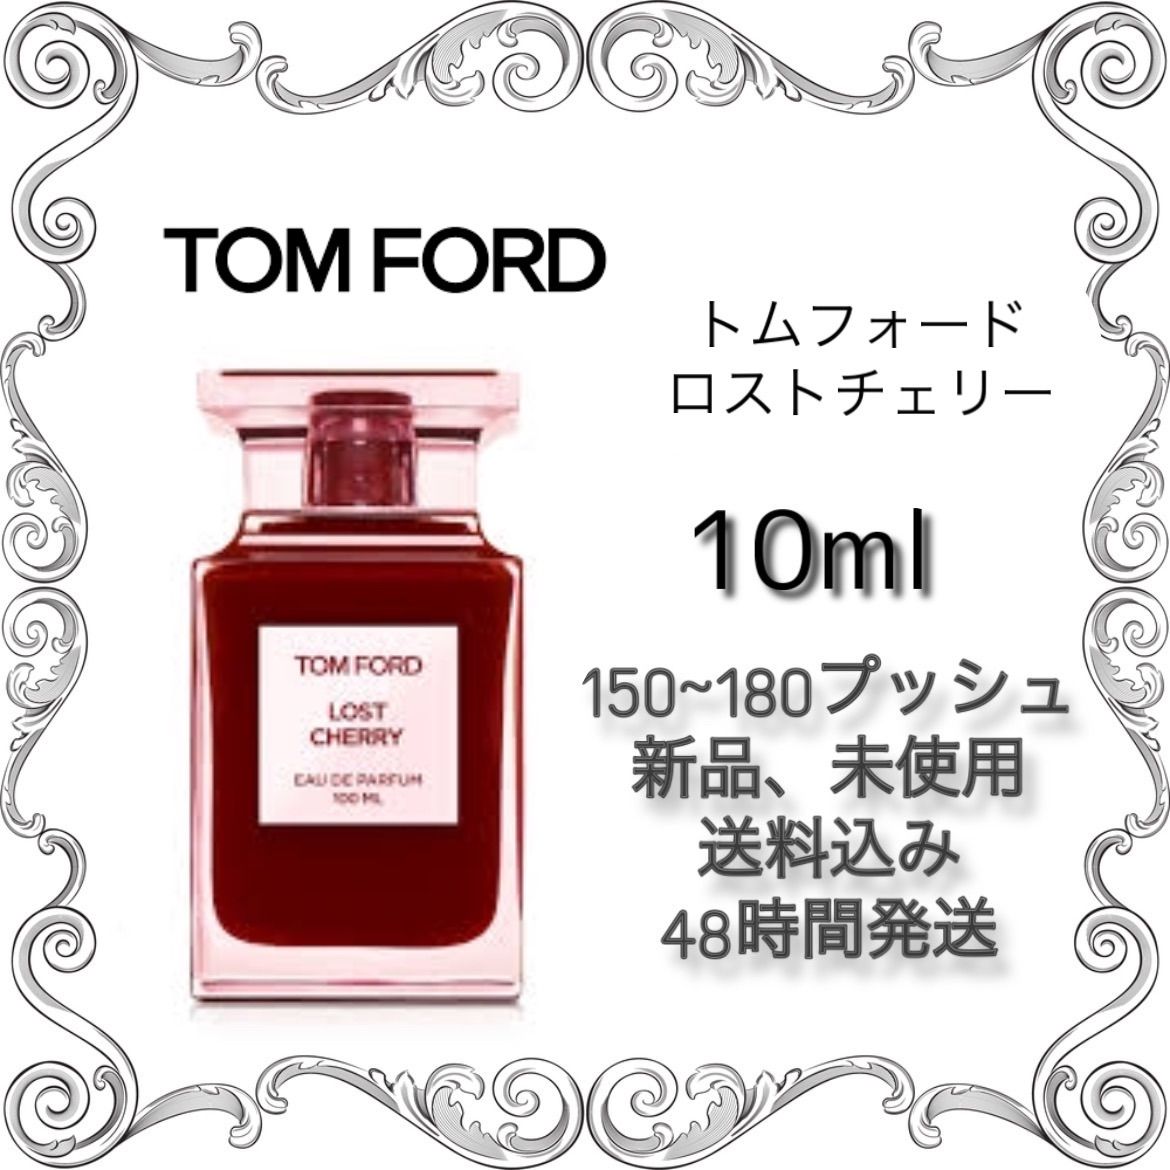 TOM FORD ロストチェリーオードパルファム 100mlサ 素晴らしい価格 - 香水(ユニセックス)